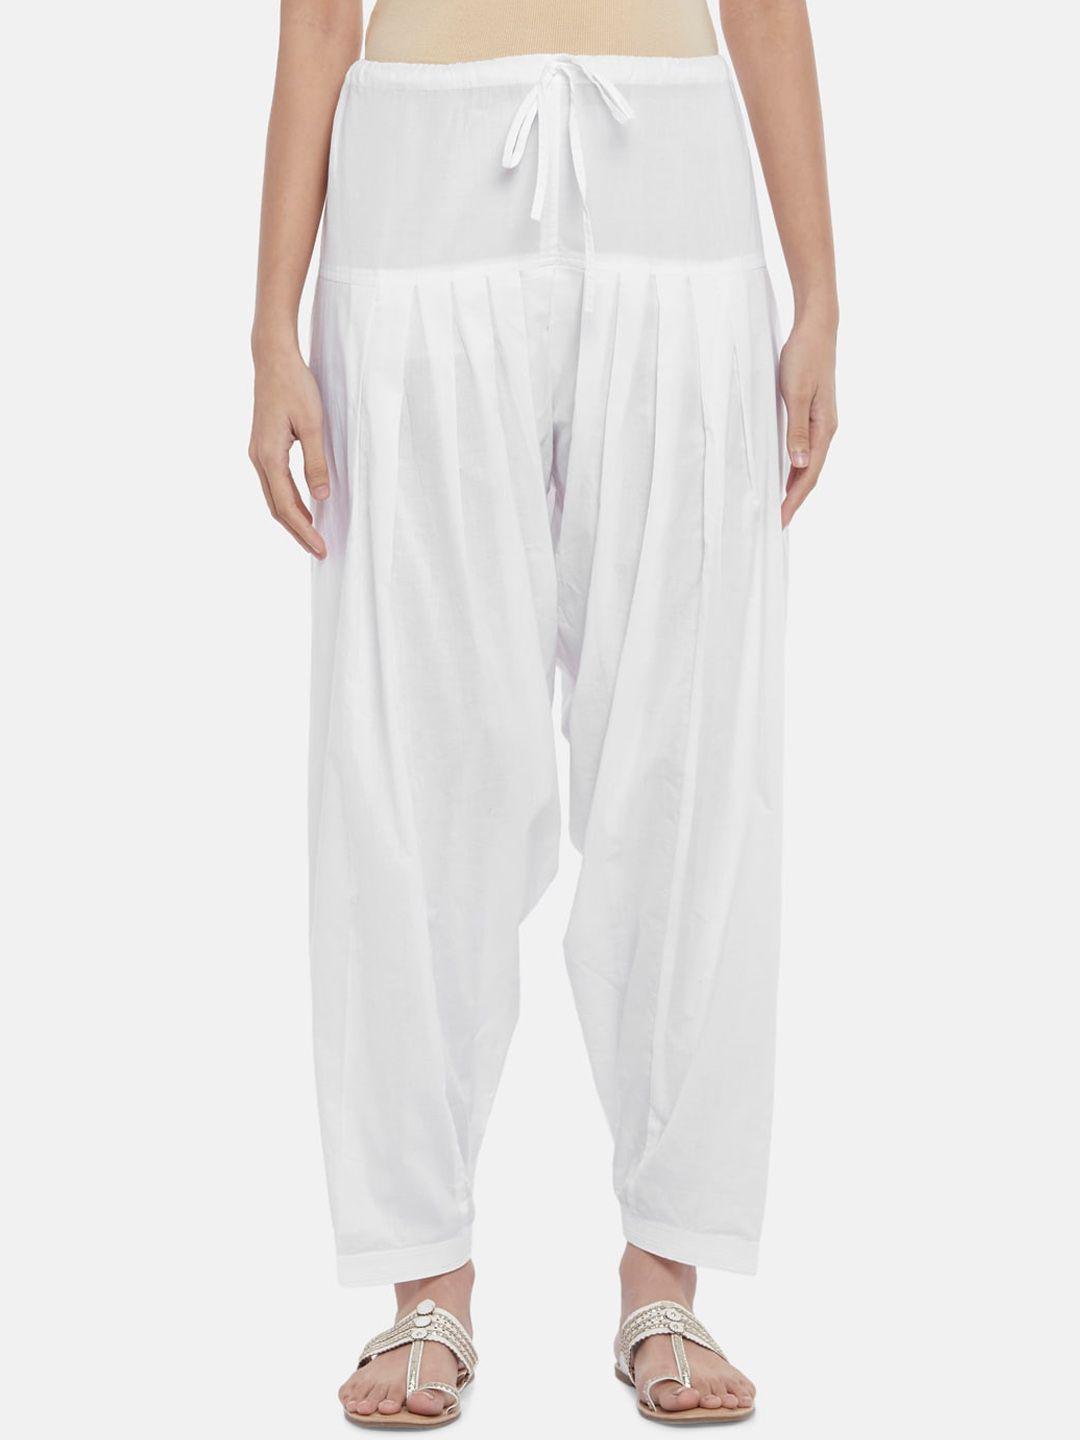 rangmanch by pantaloons women white solid pure cotton salwar